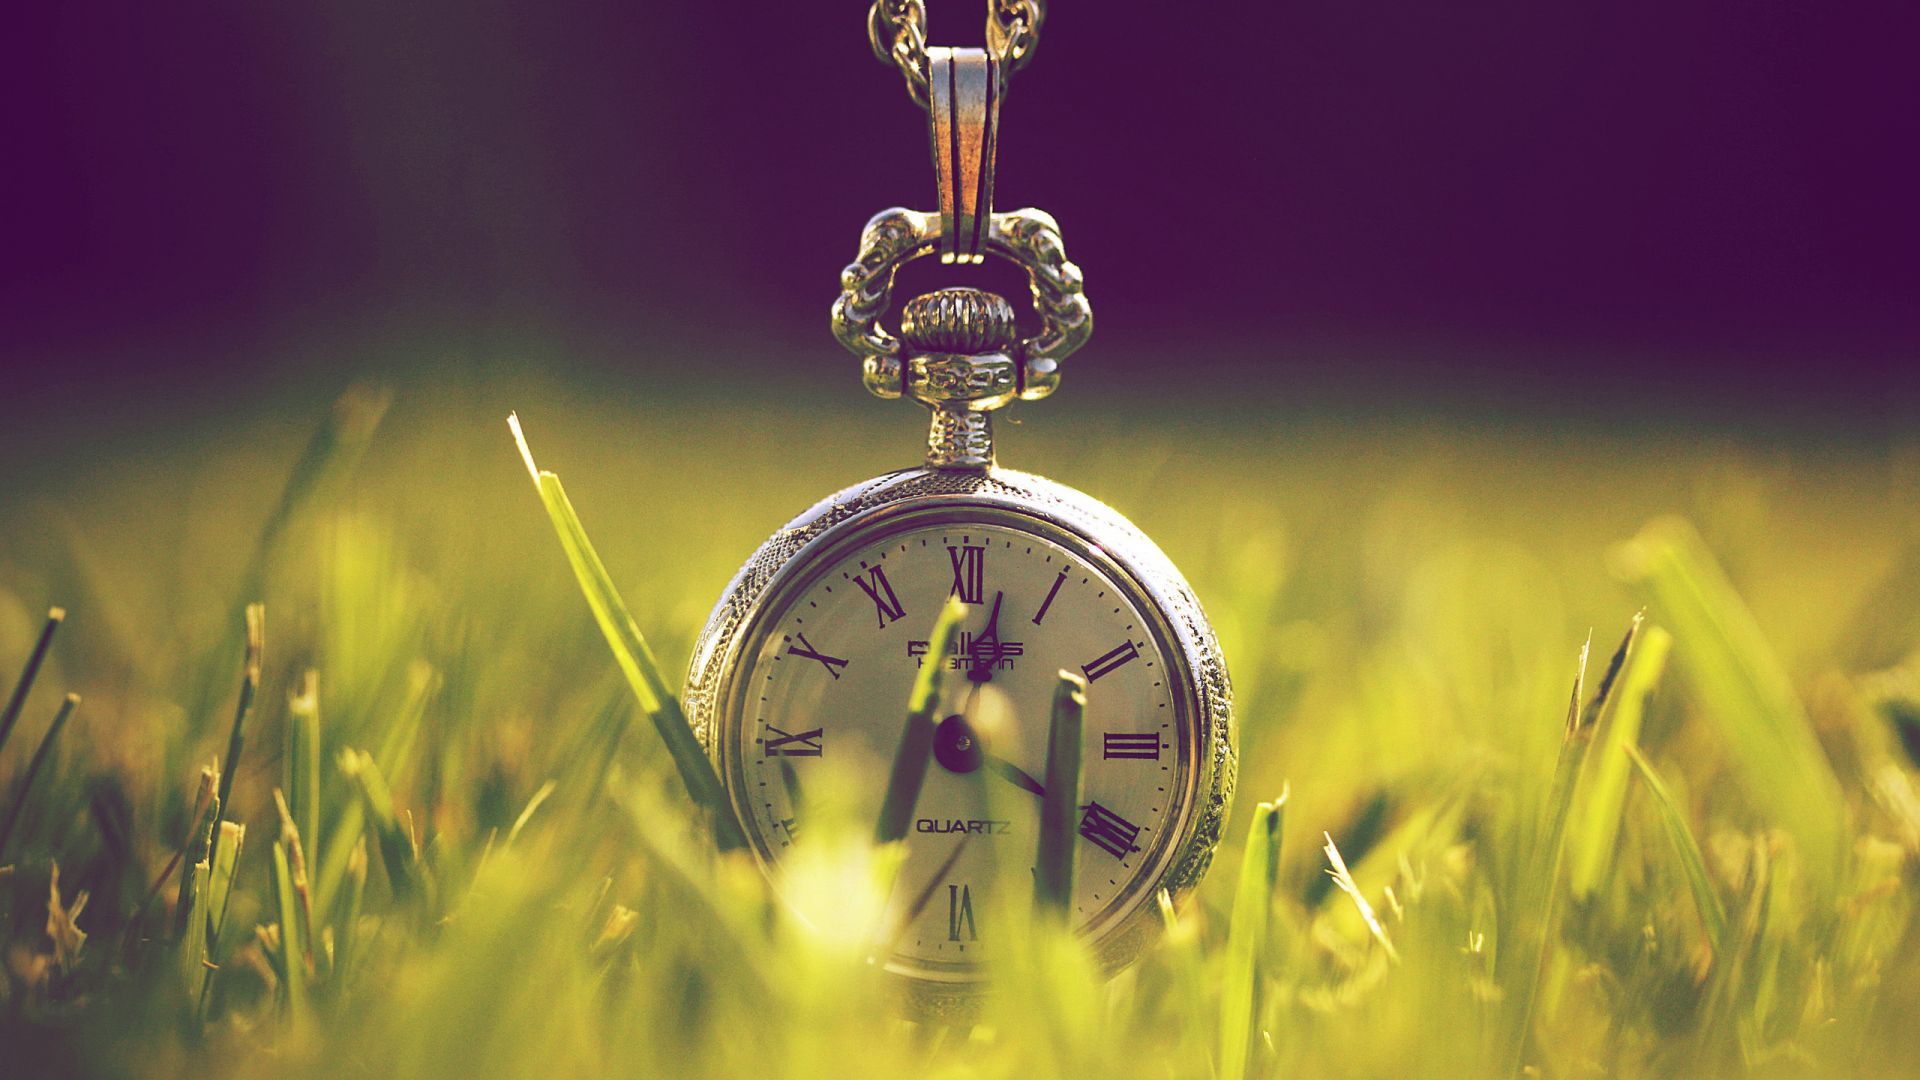 Wallpaper Old clock in grass